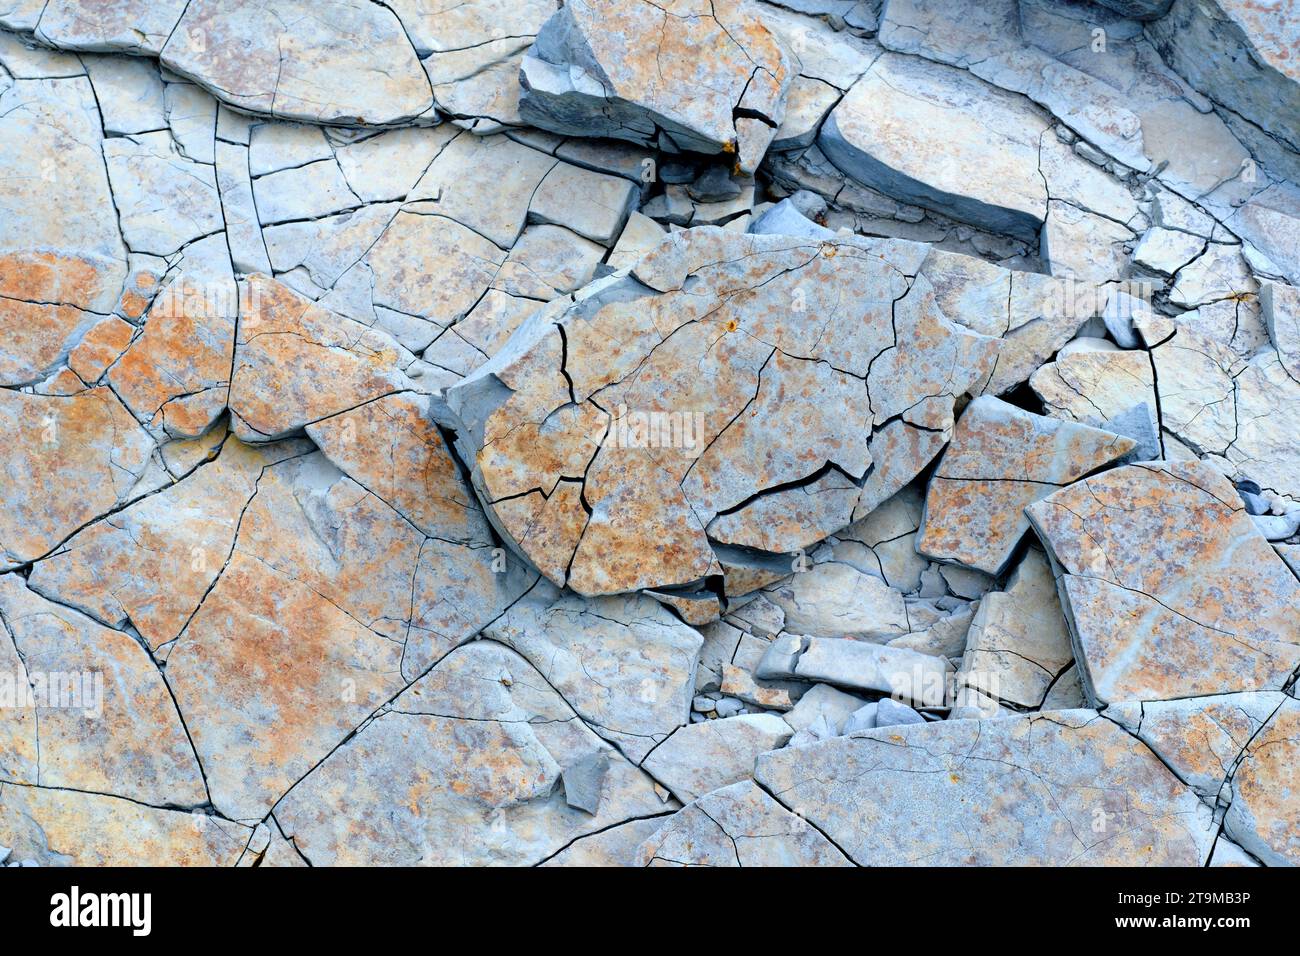 Rocky soil cracked by erosion. Stock Photo